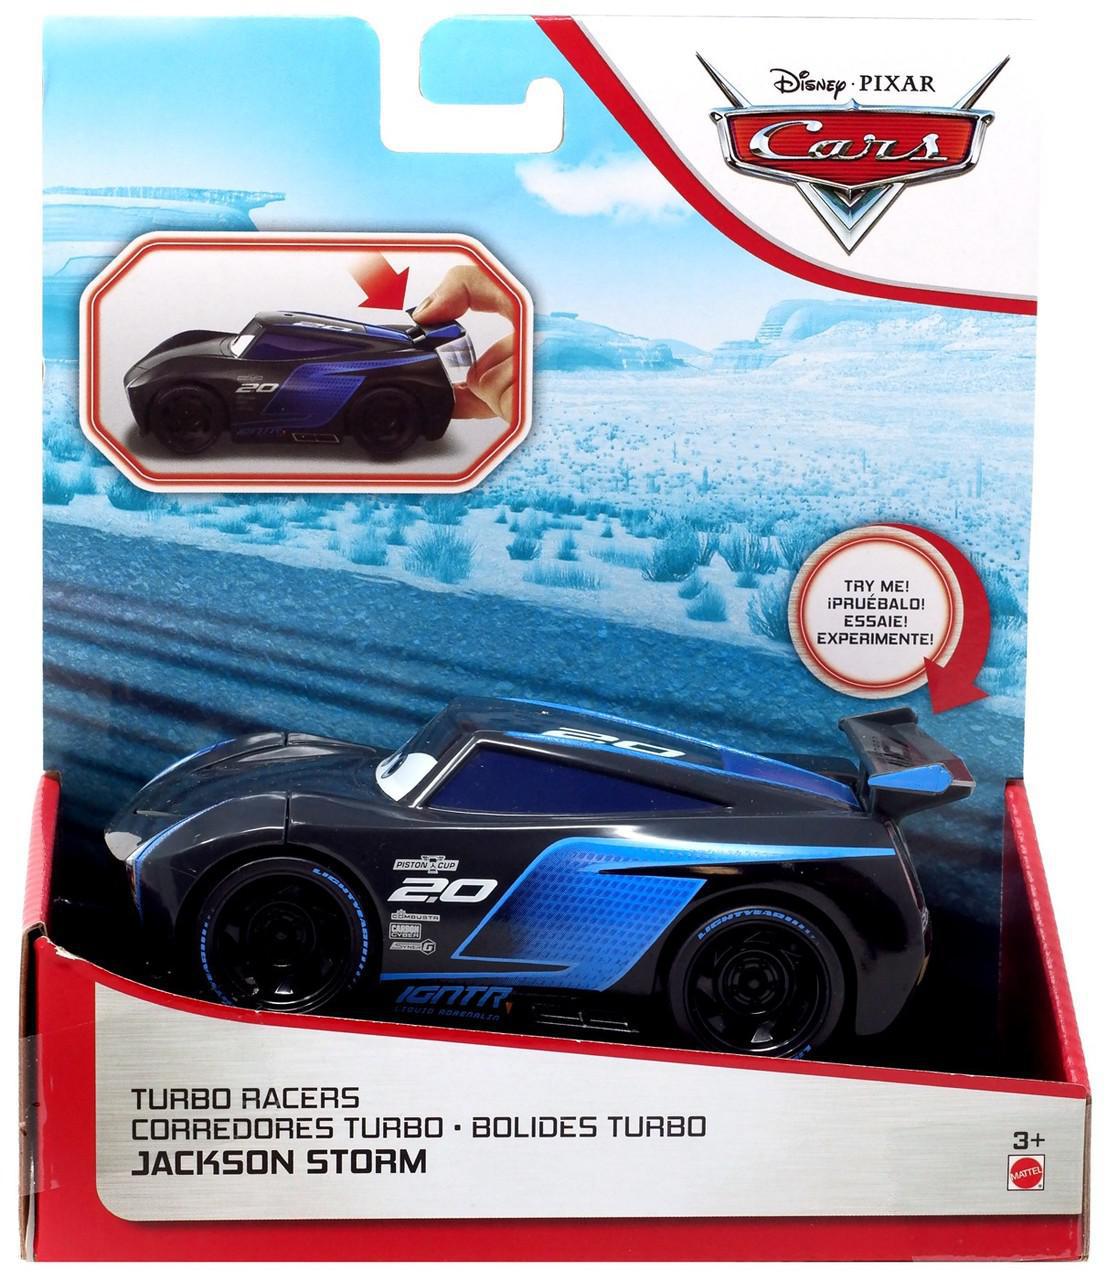 Disney Pixar Cars Cars 3 Turbo Racers - Includes Lightning McQueen, Dinoco Cruz Ramirez, Jackson Storm and Danny Swervez